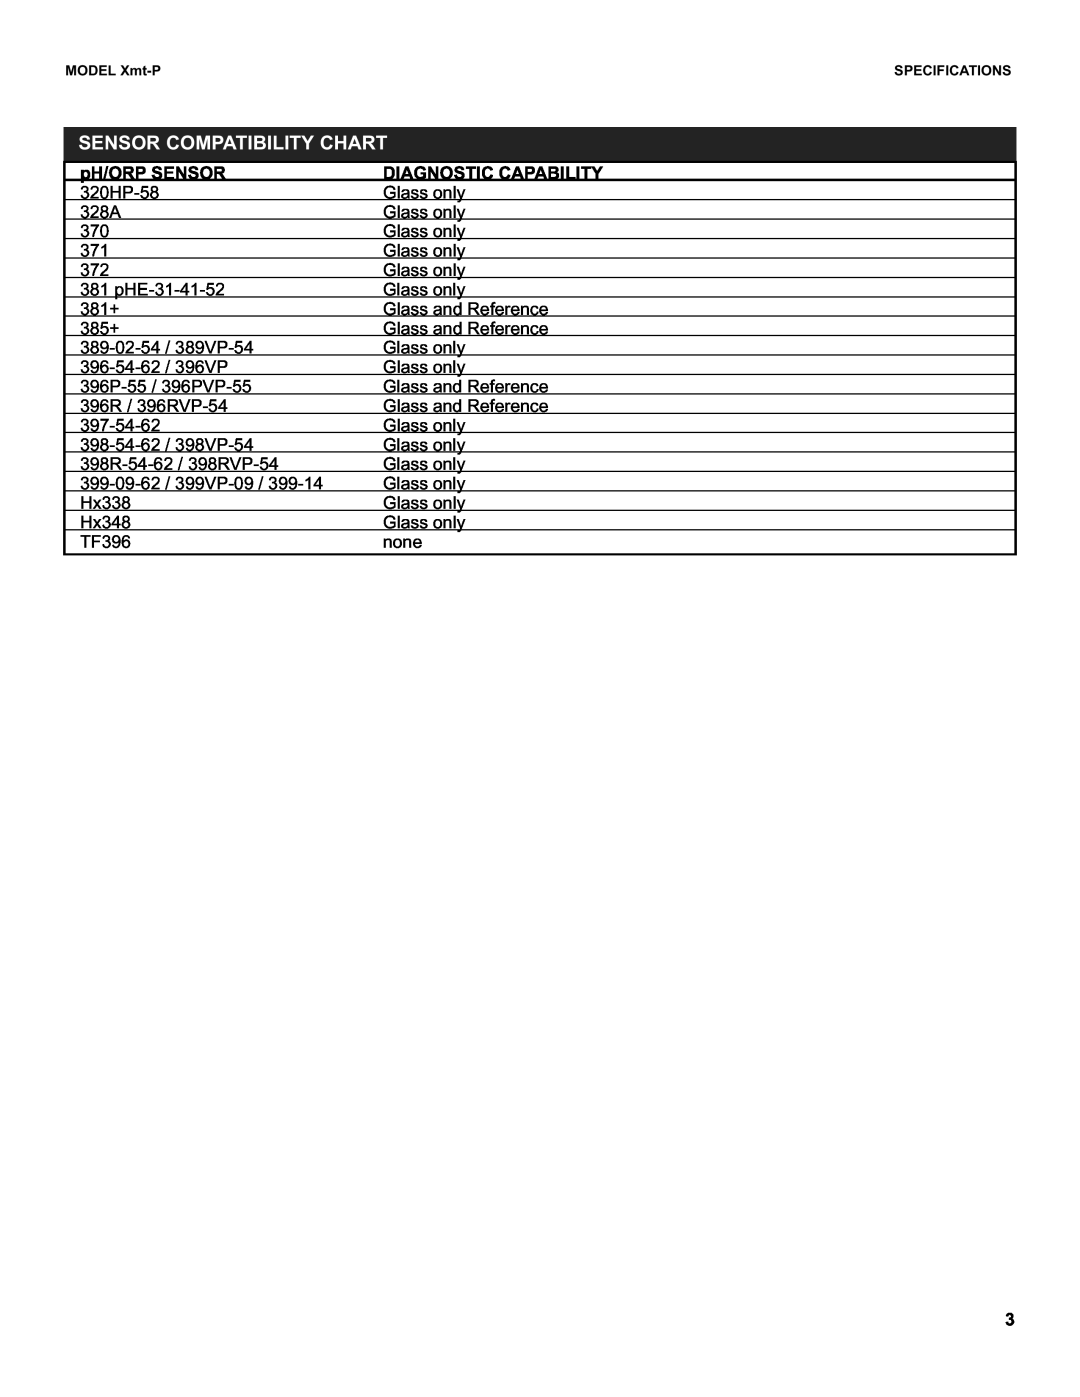 Emerson XMT-P-FF/FI instruction sheet Sensor Compatibility Chart, pH/ORP SENSOR, Diagnostic Capability 